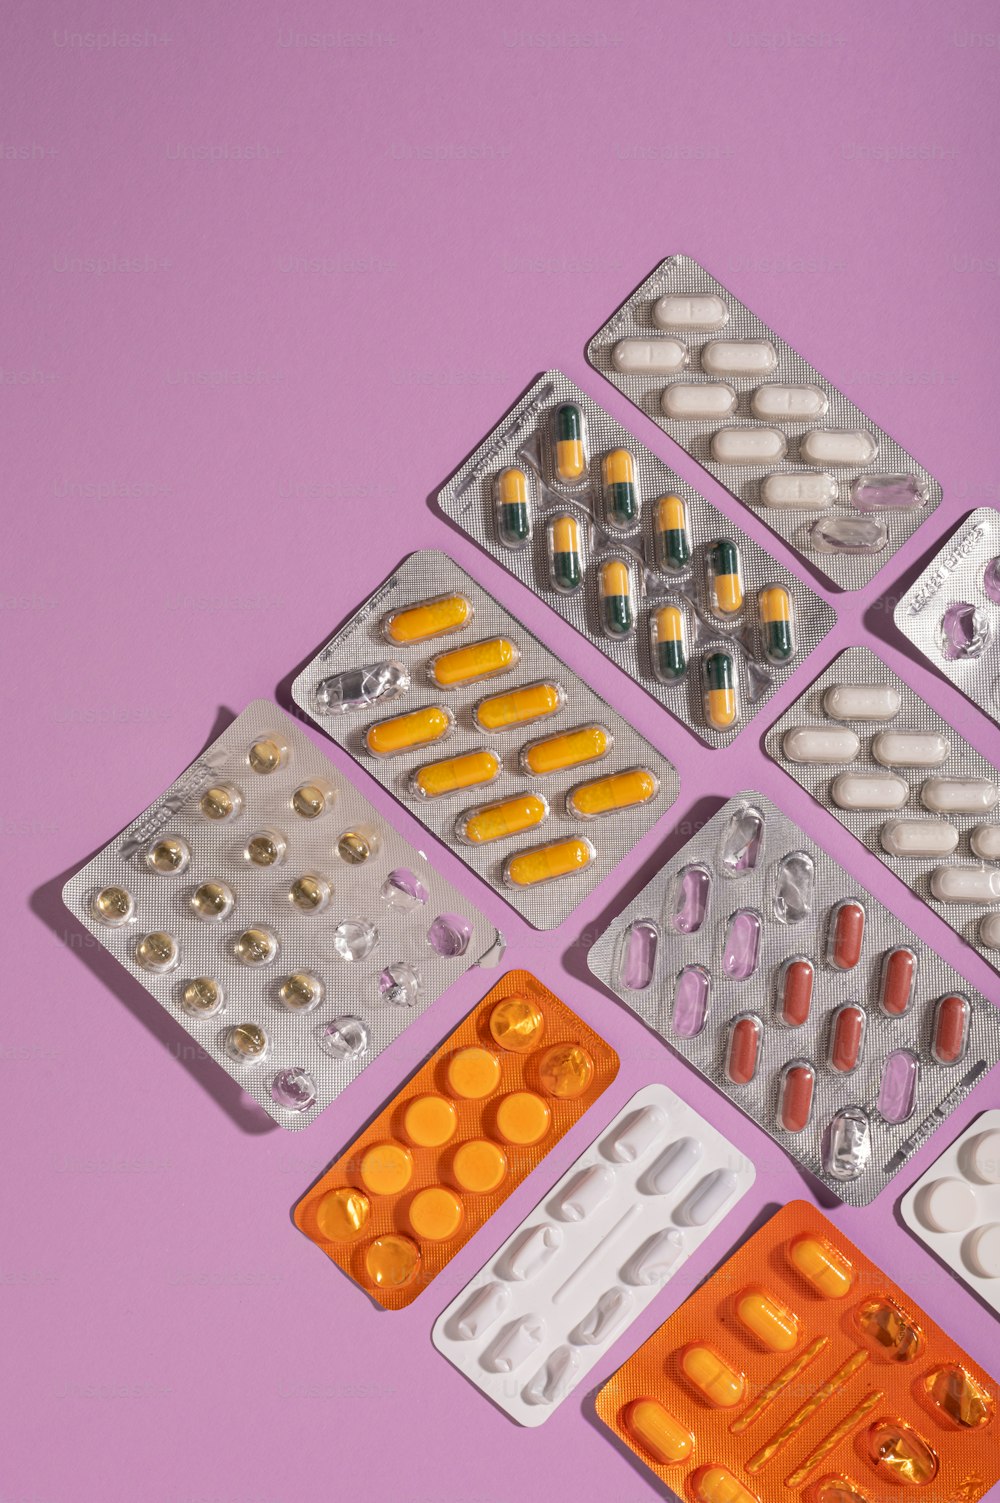 Un grupo de píldoras y tabletas sobre un fondo púrpura